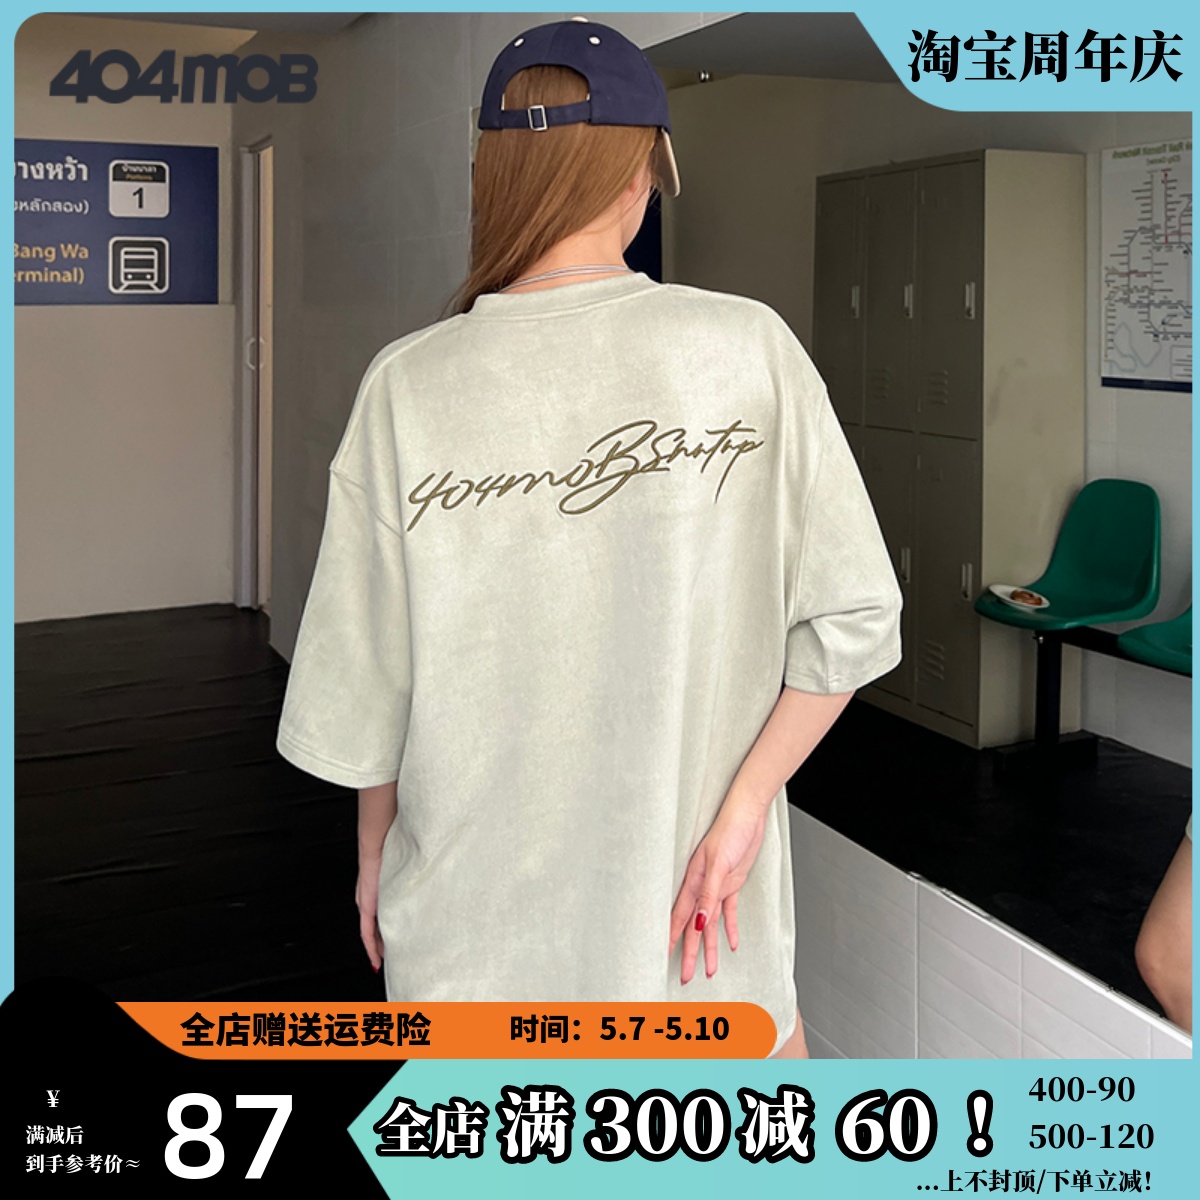 404MOB花体刺绣短袖t恤